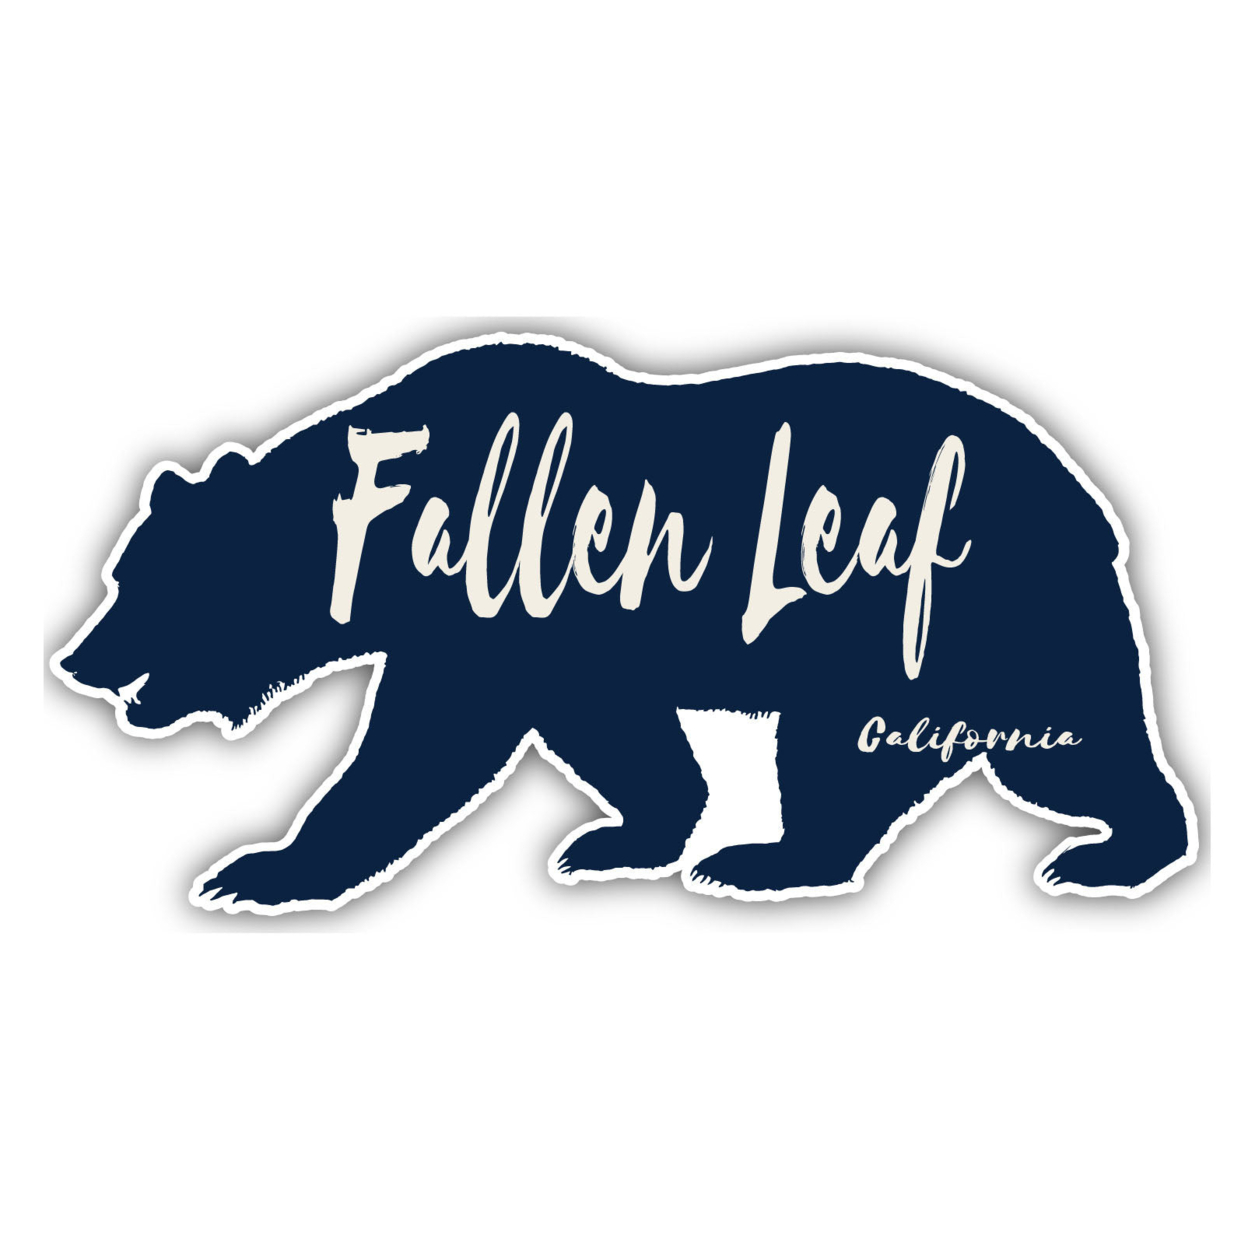 Fallen Leaf California Souvenir Decorative Stickers (Choose Theme And Size) - Single Unit, 12-Inch, Tent